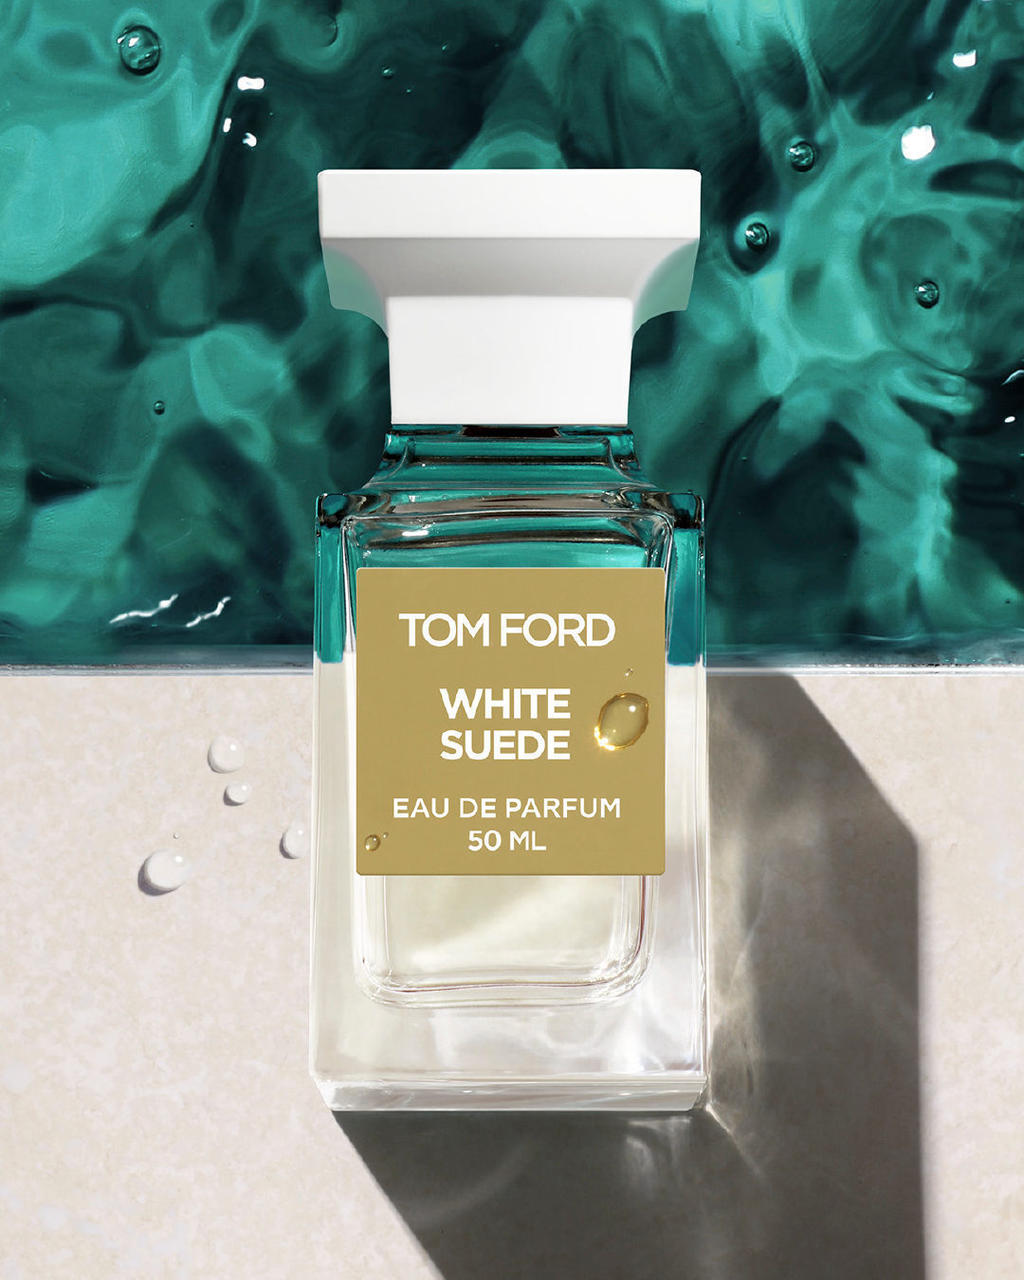 Tom Ford Beauty | Lane Crawford